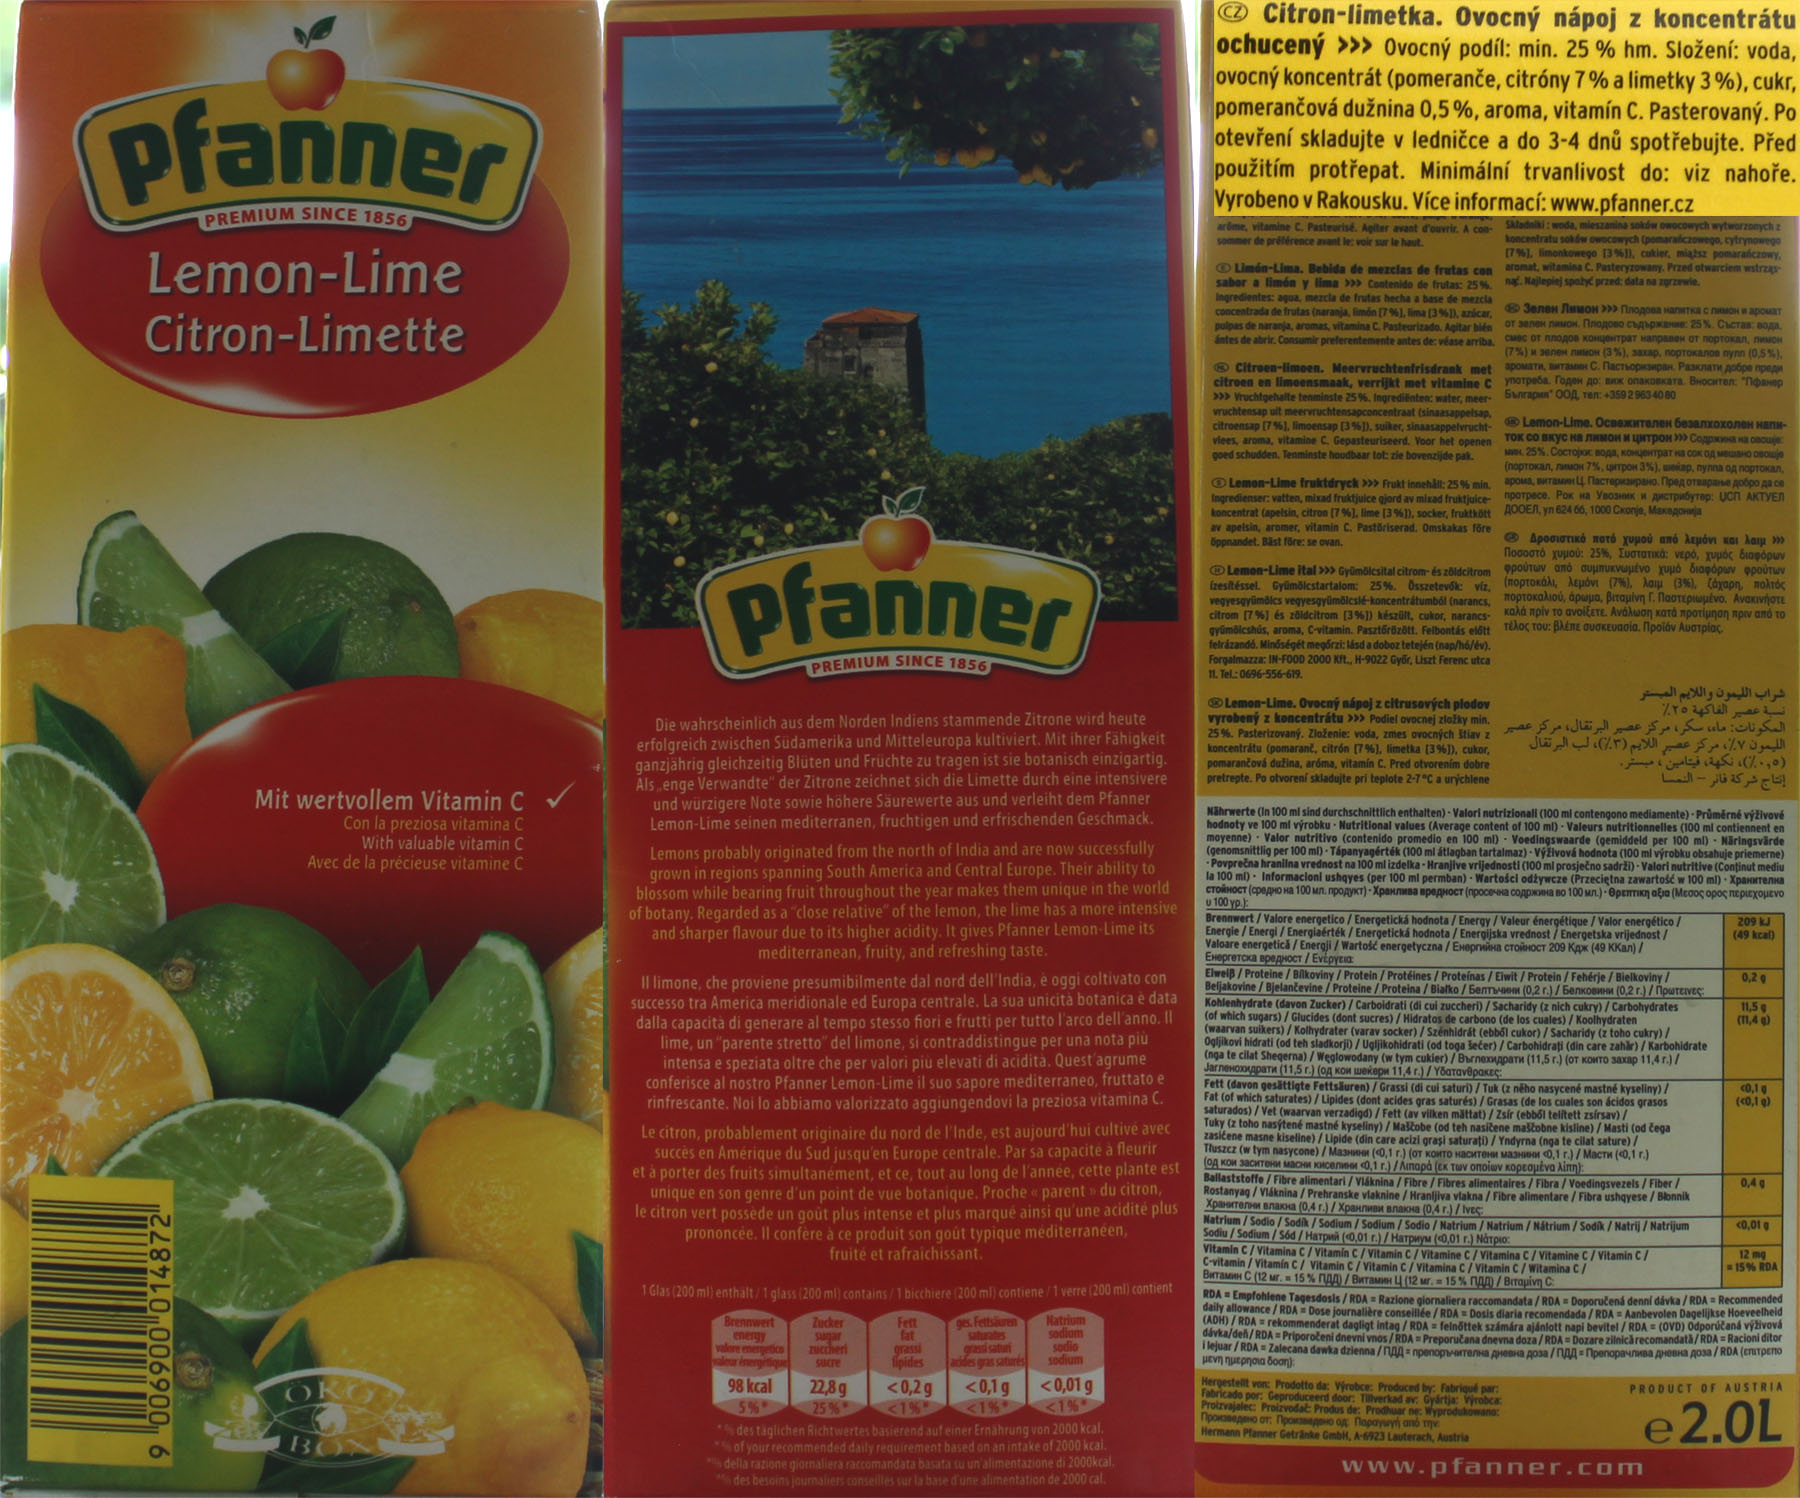 Citrusovo citrusový Pfanner citron limetka